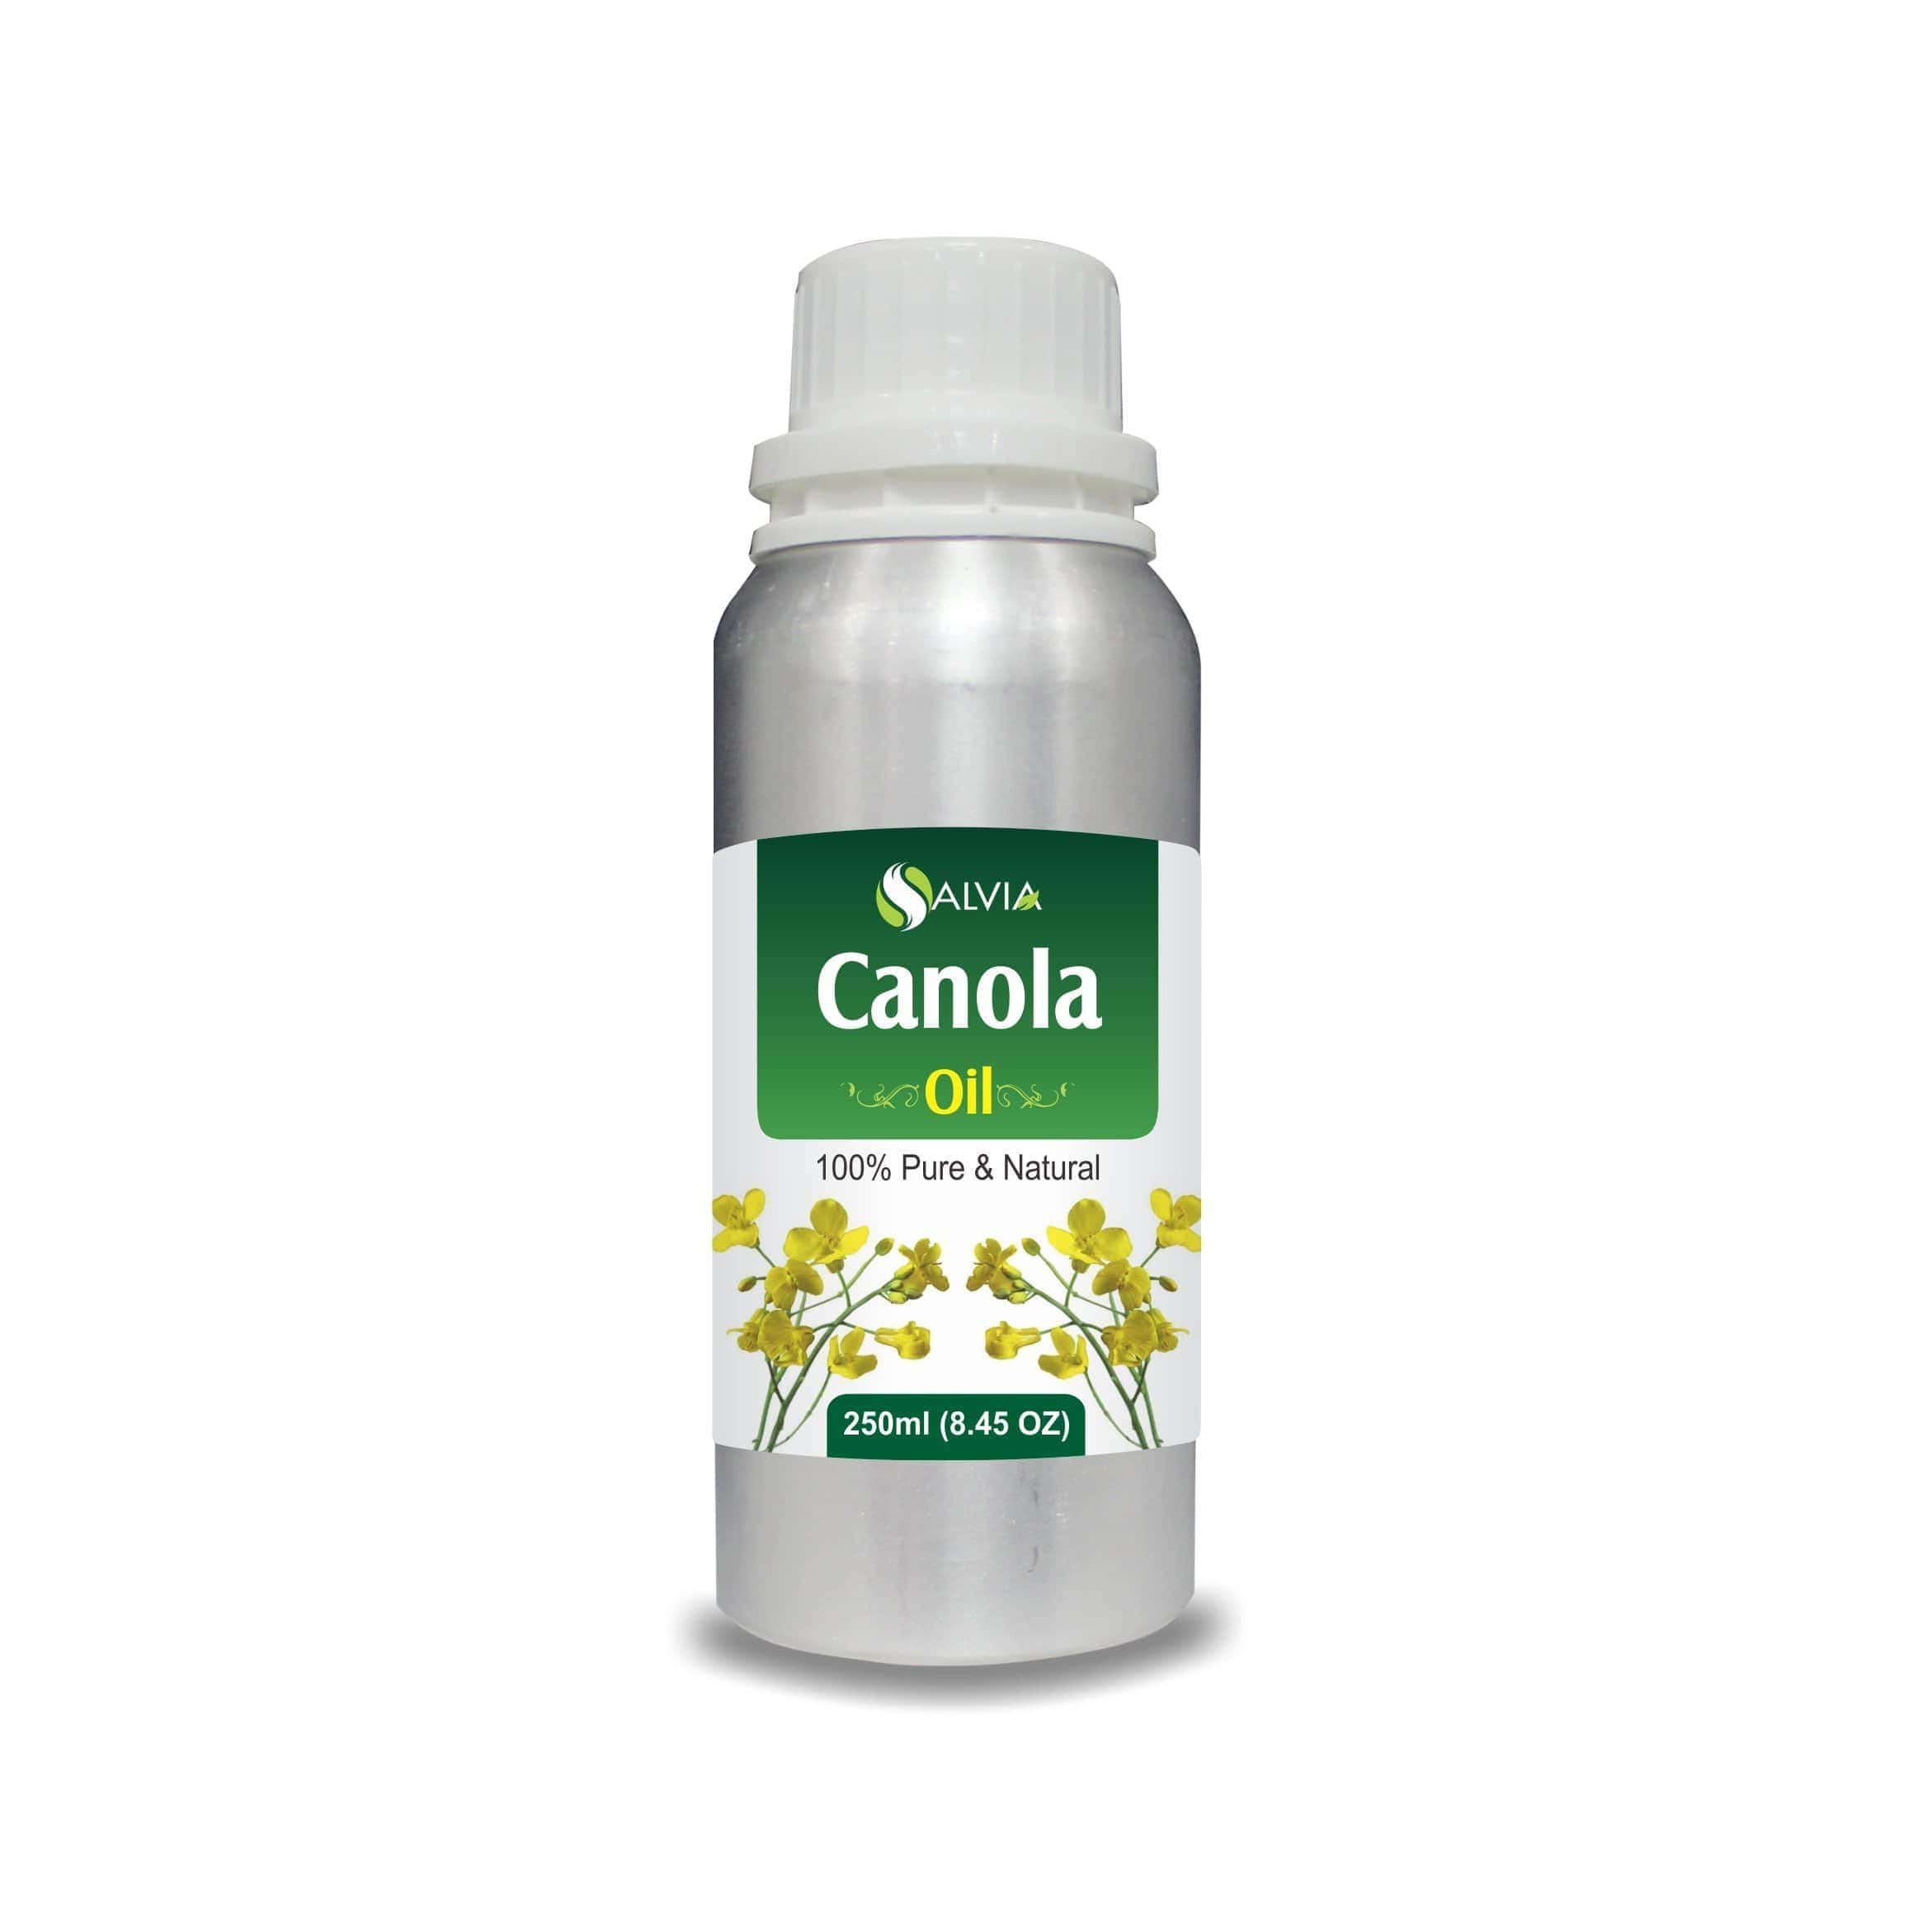 canola oil benefits